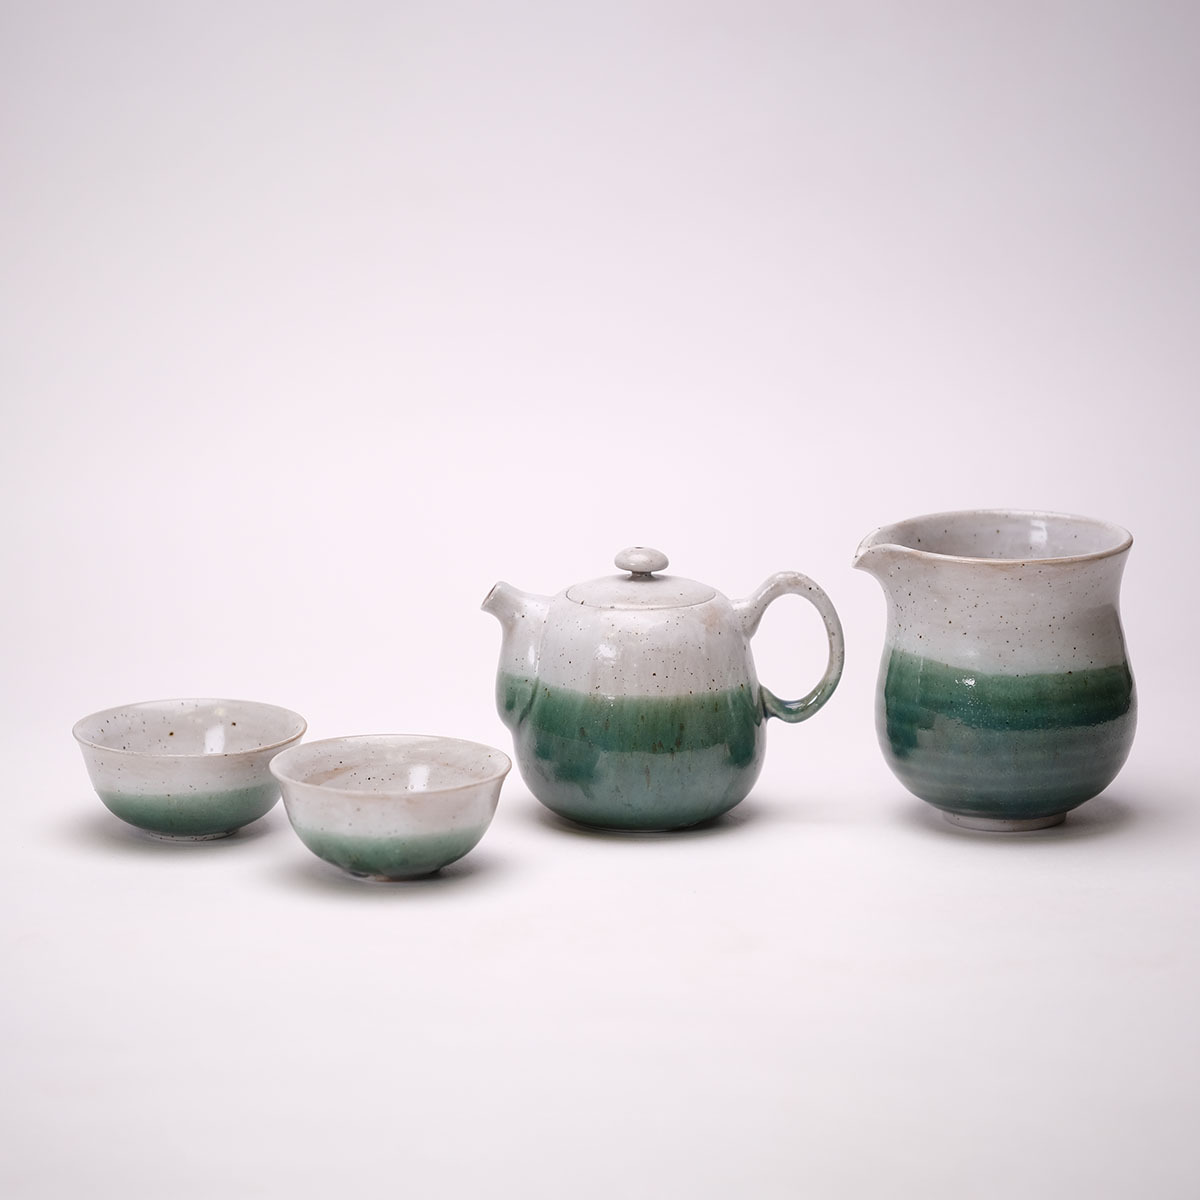 LIN'S CERAMICS STUDIO│Taiwan New Hundred Teapots